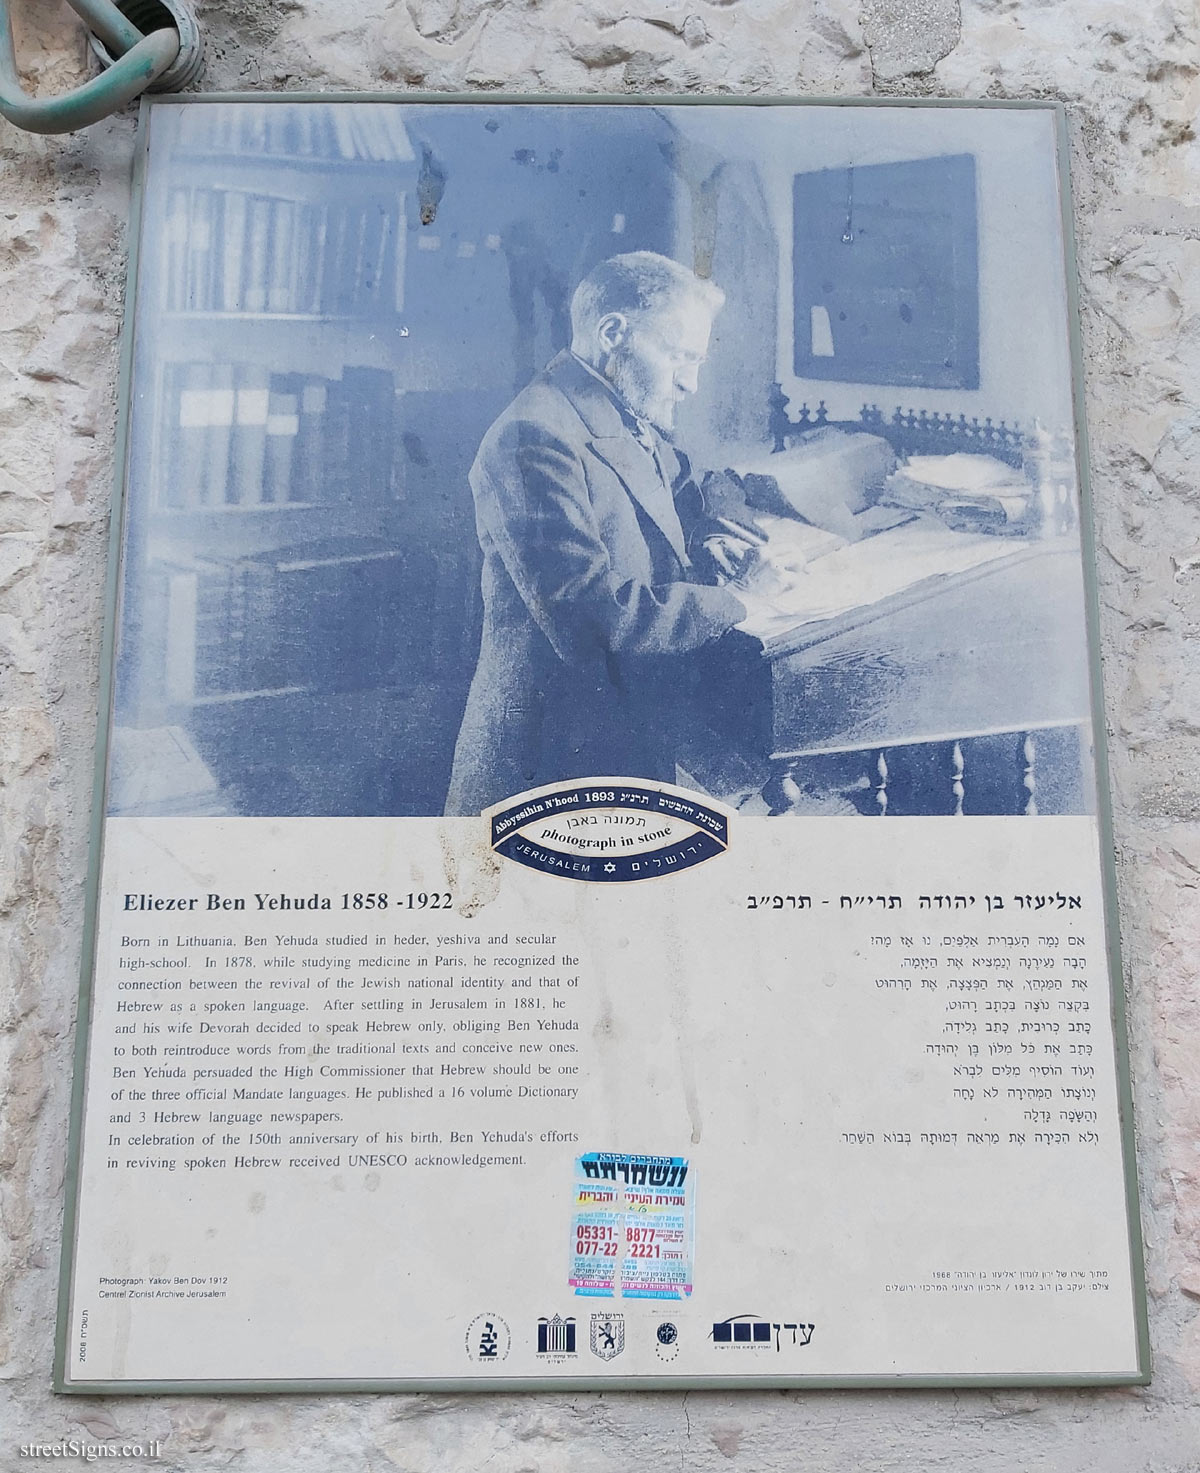 Jerusalem - Photograph in stone -  Eliezer Ben Yehuda